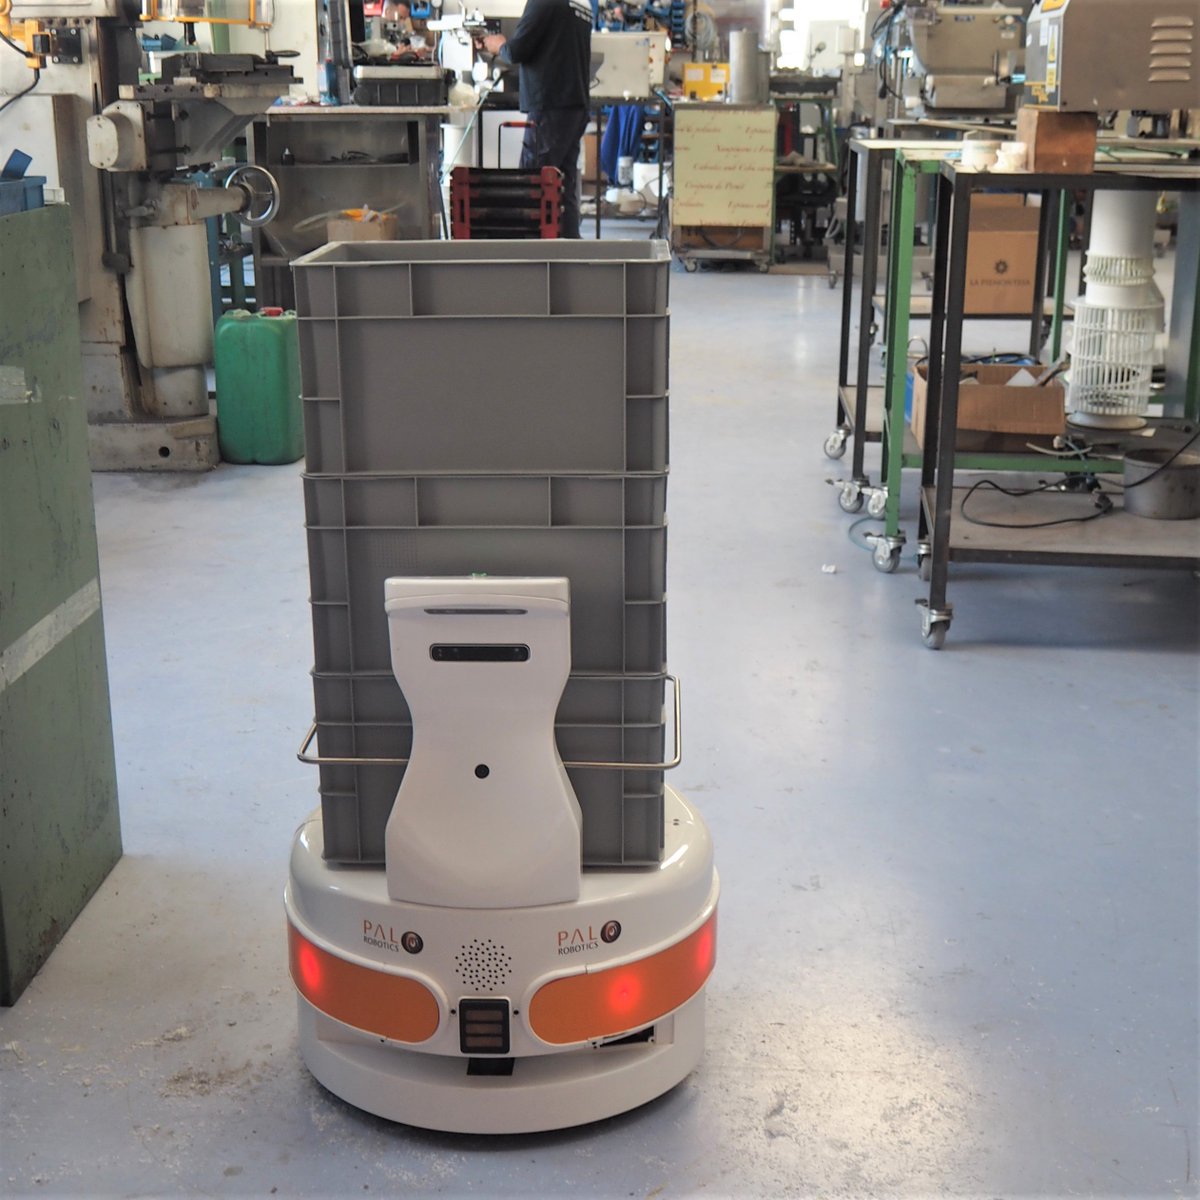 RT @PALRobotics: 🏭🤖 Robots are driving the transformation of #industry and #logistics, how is this happening? The answer, at #ERF2019 👉 blog.pal-robotics.com/european-robot… @eu_Robotics #autonomousmobilerobots #autonomousvehicles #stocktaking #collaborative #cobot